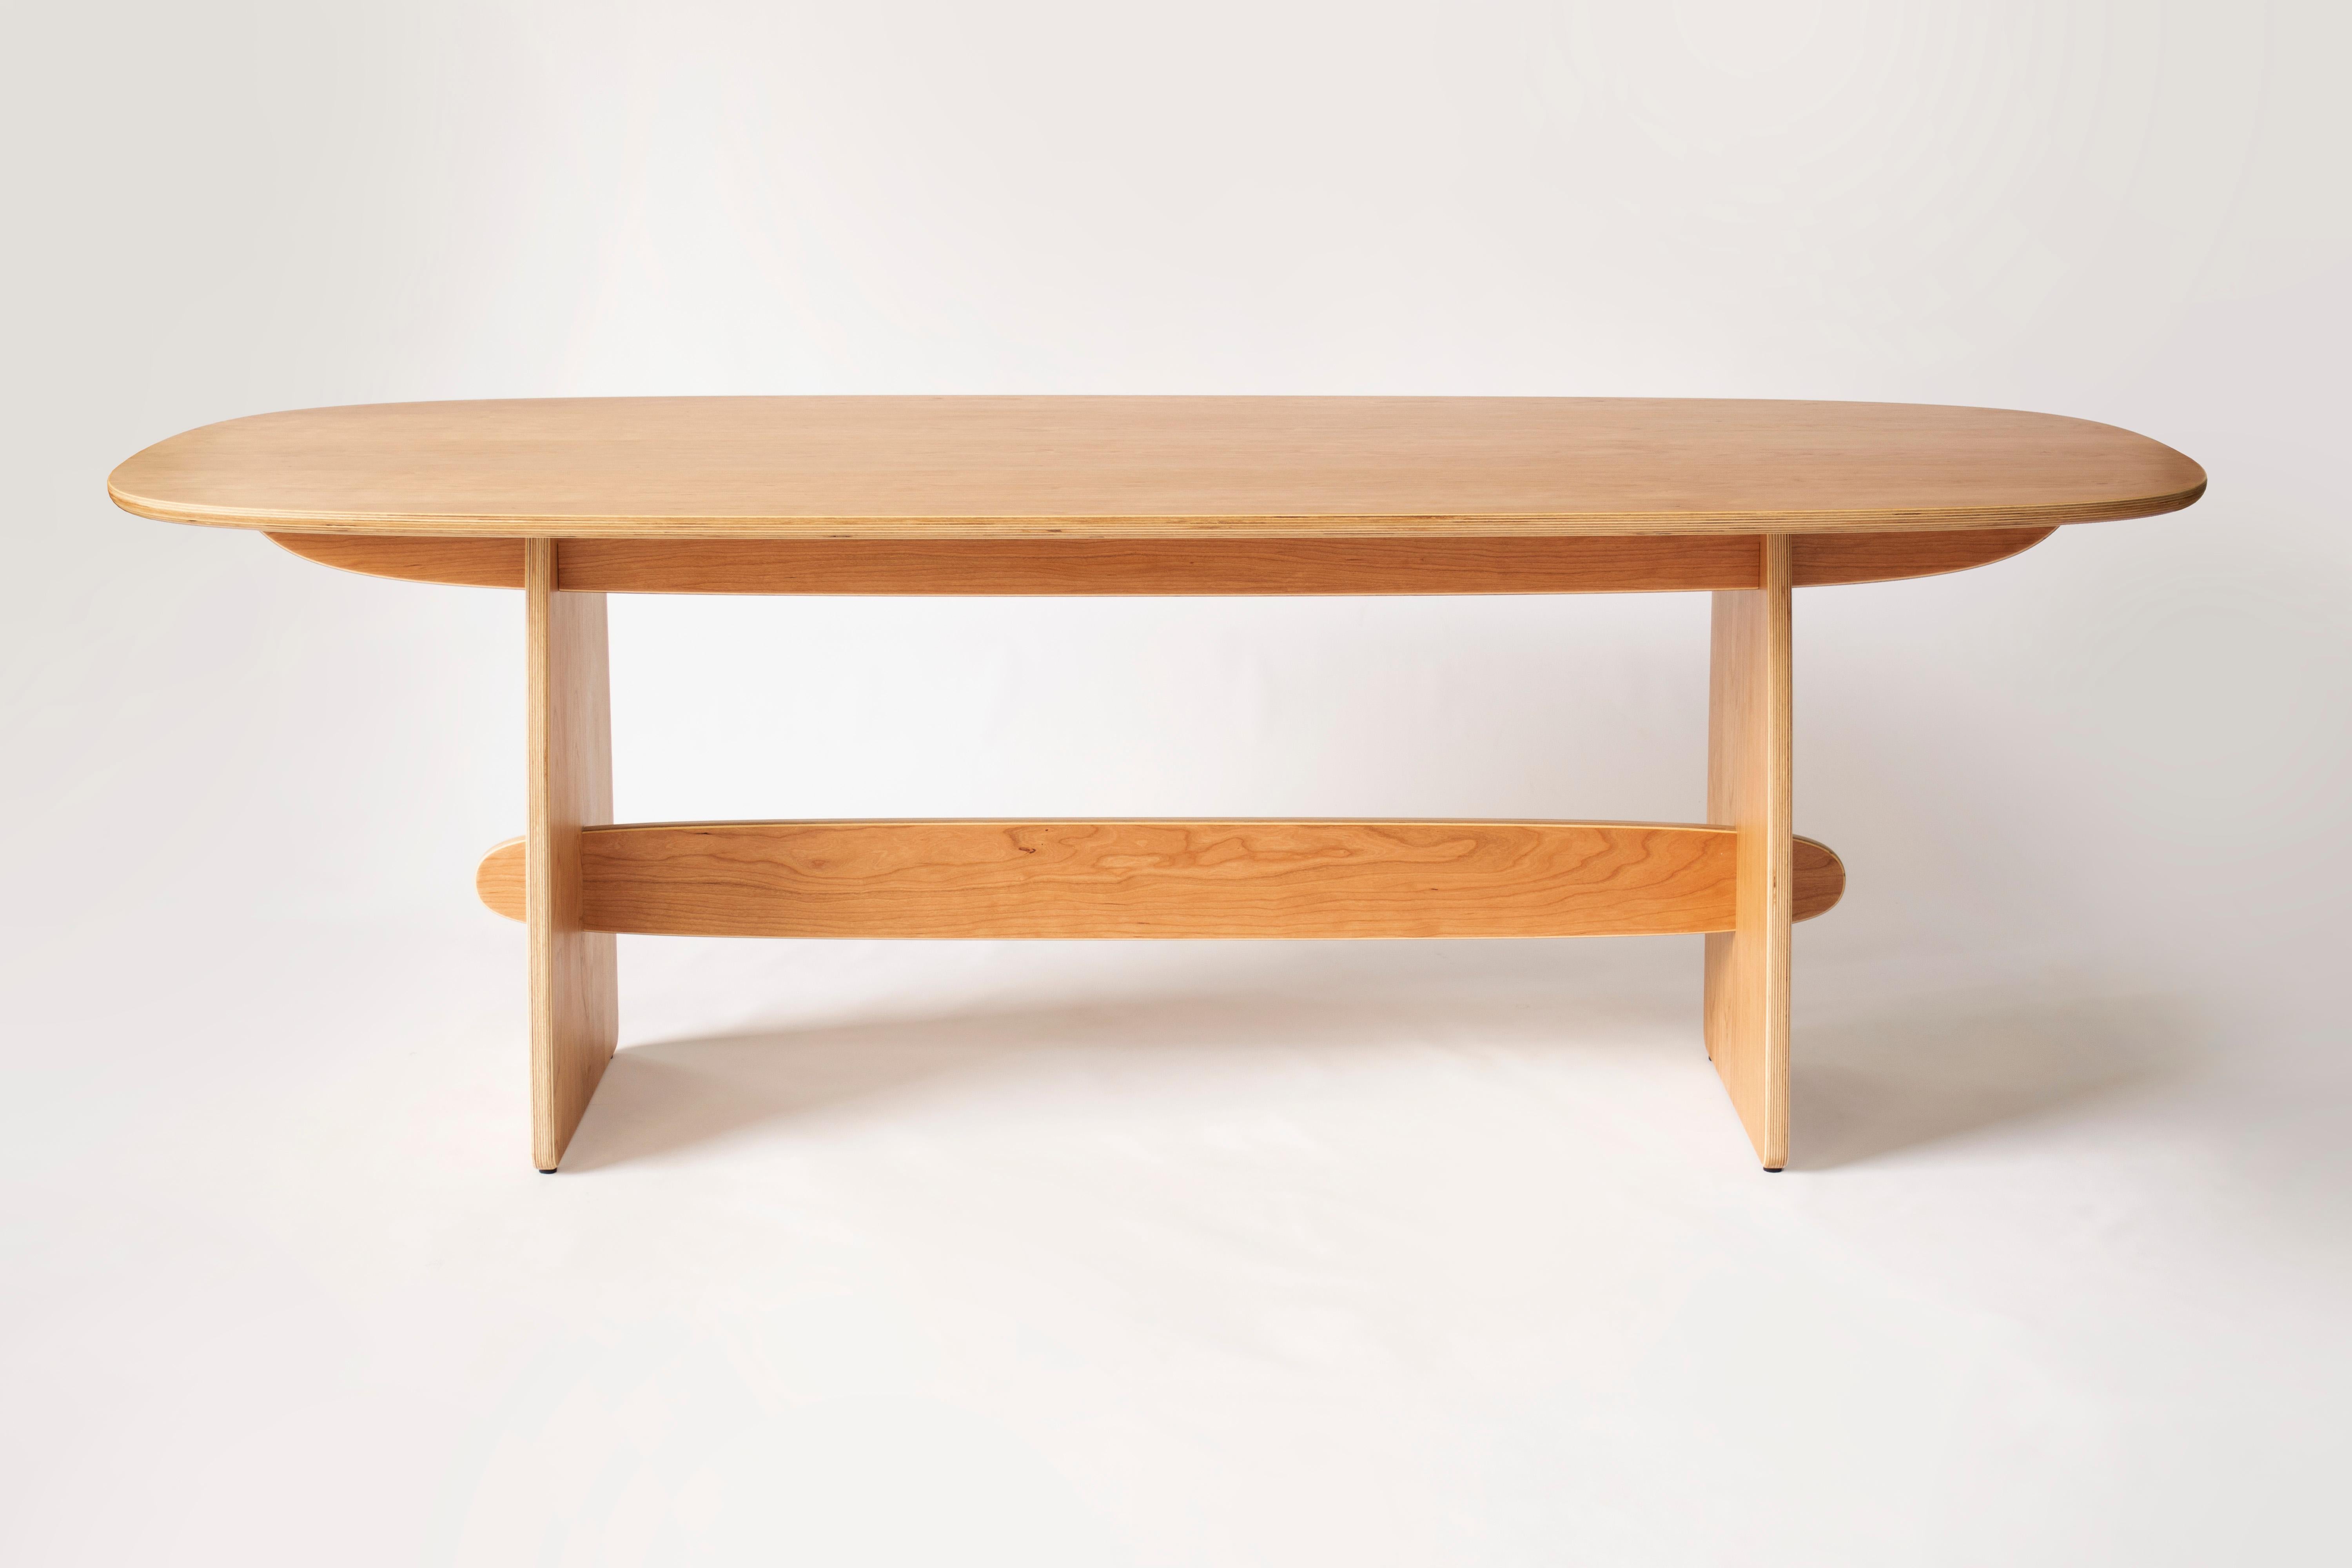 Oiled Woodbine Dining Table in cherry veneer hardwood plywood by KLN Studio For Sale